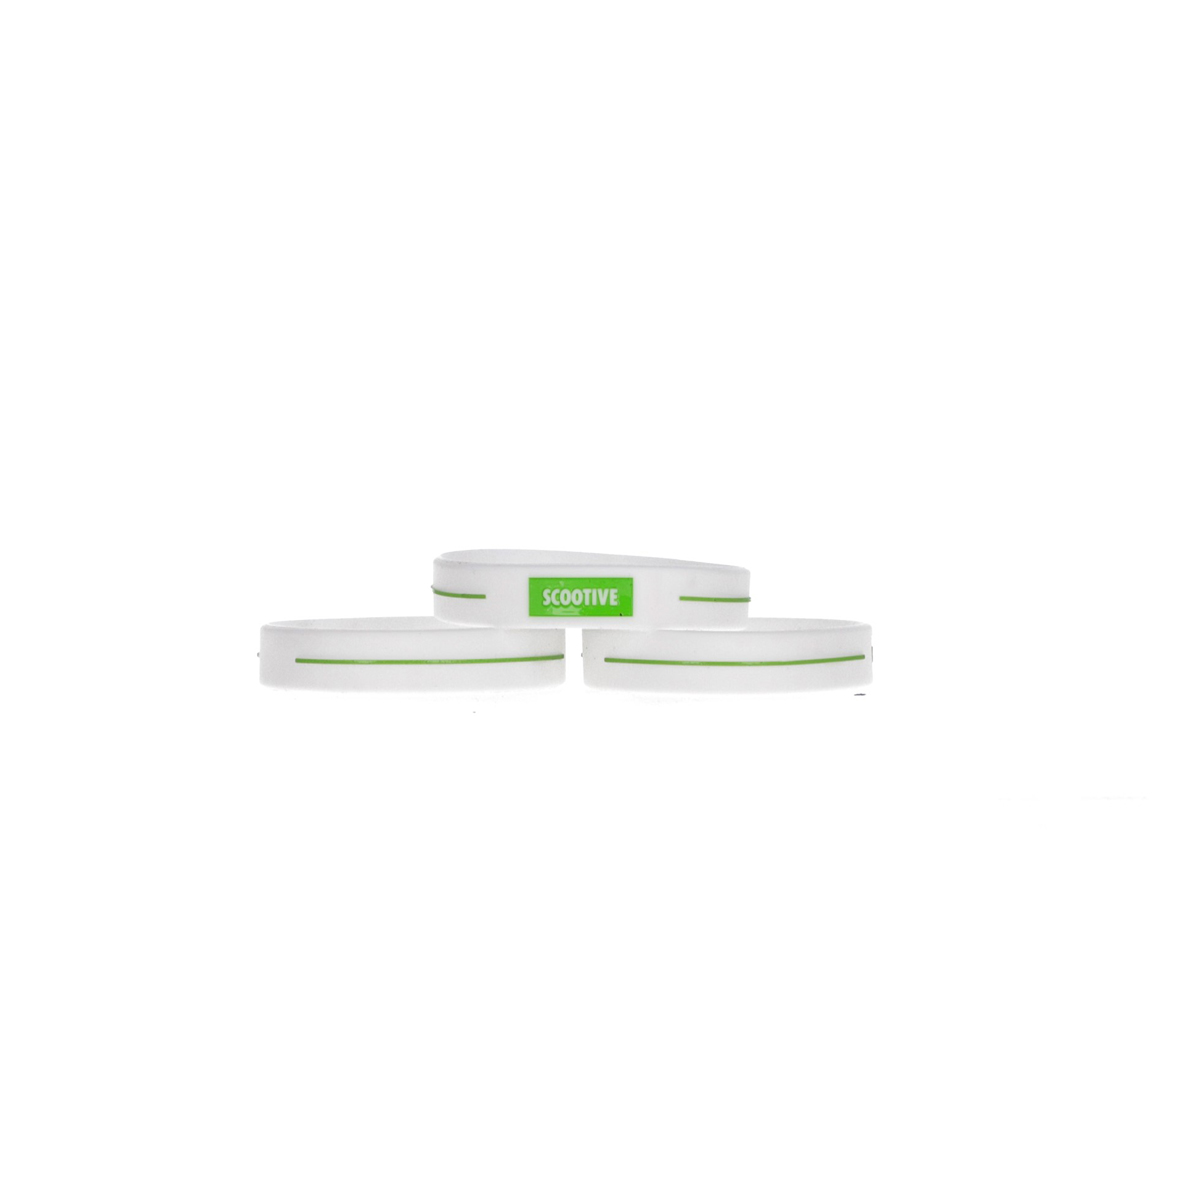 Opaska Scootive Green Line / White (miniatura)